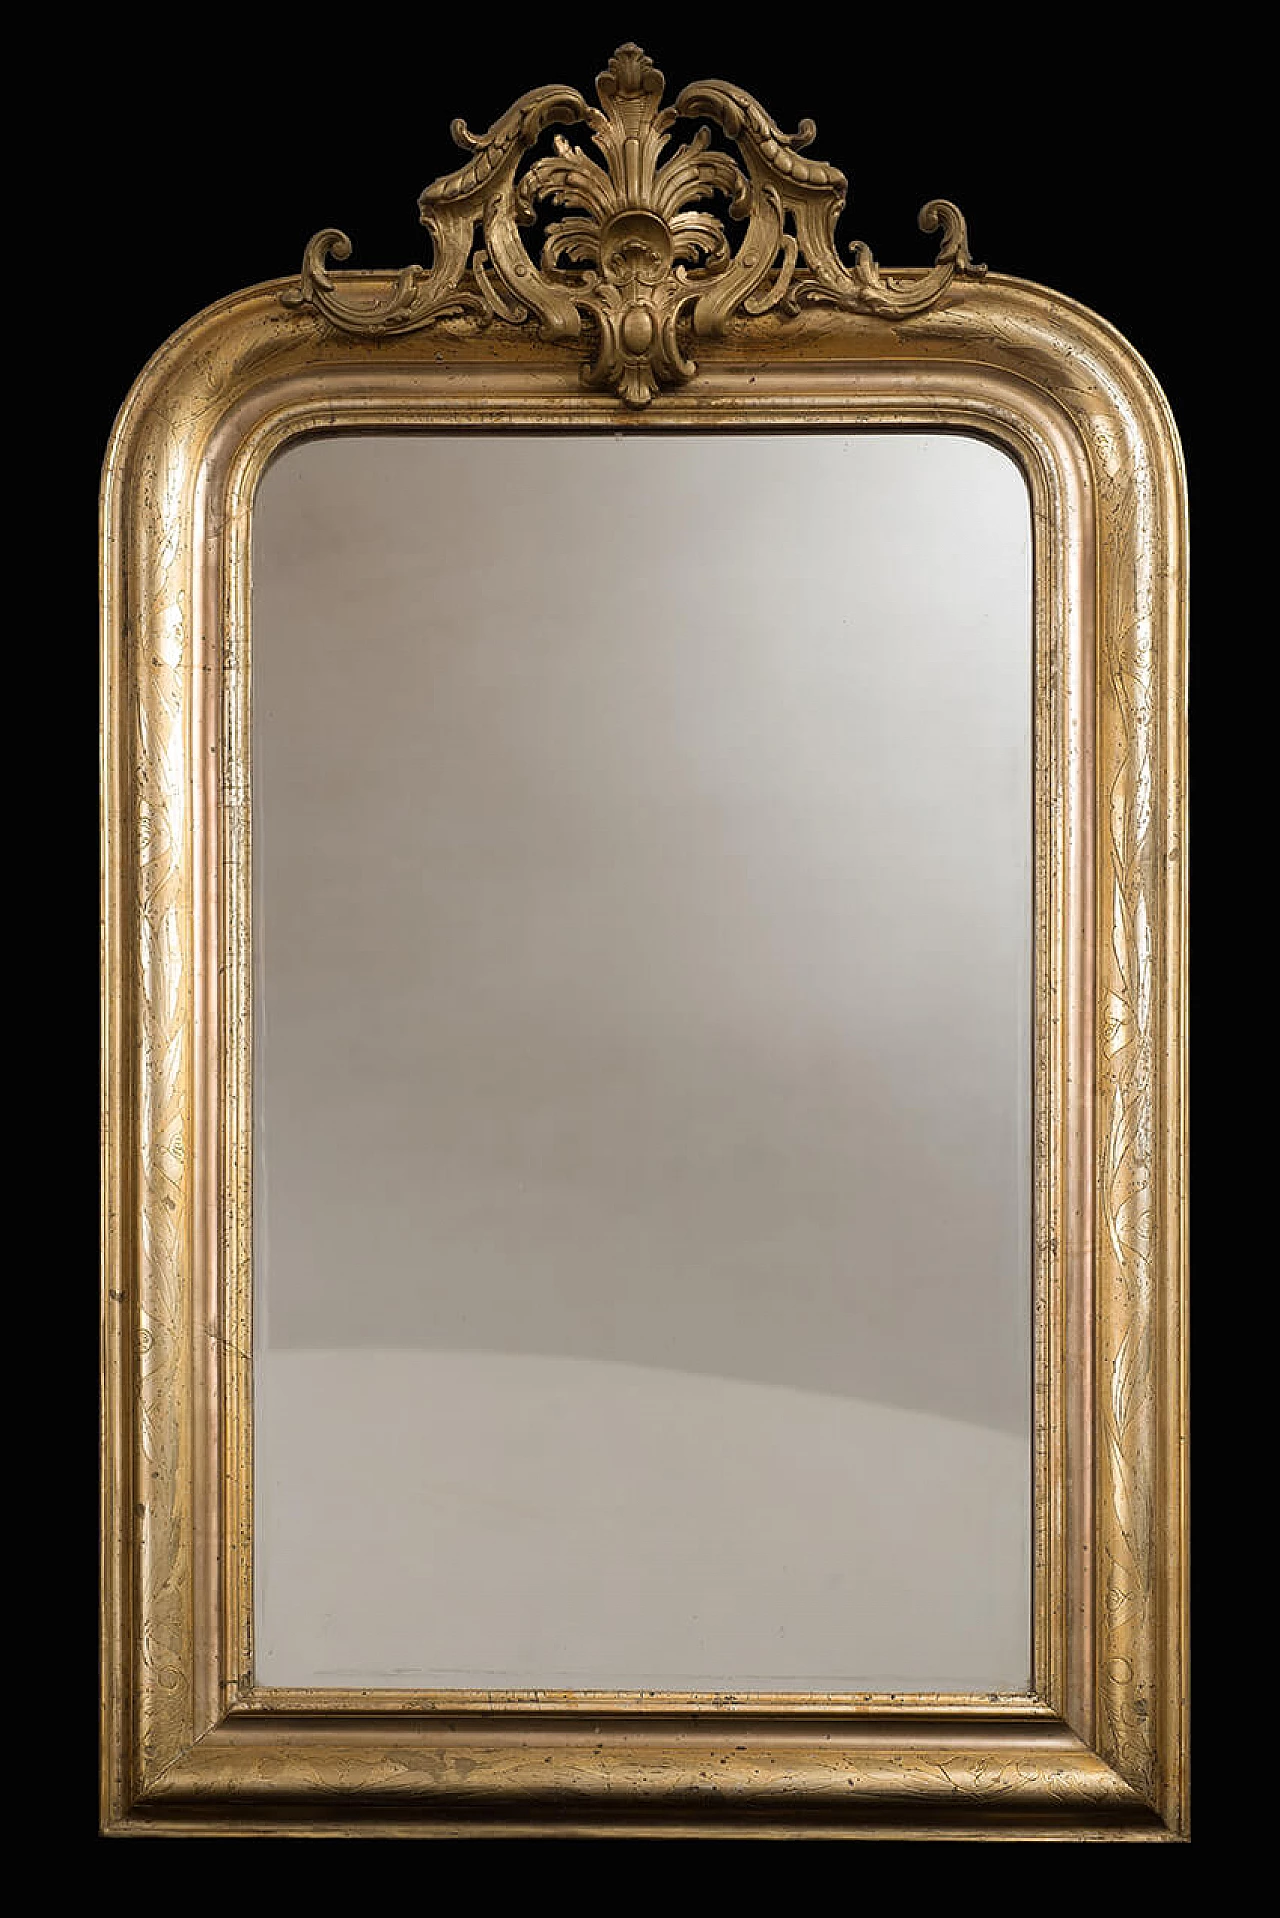 Napoleon III style mirror in gilded wood, 19th century 1469878